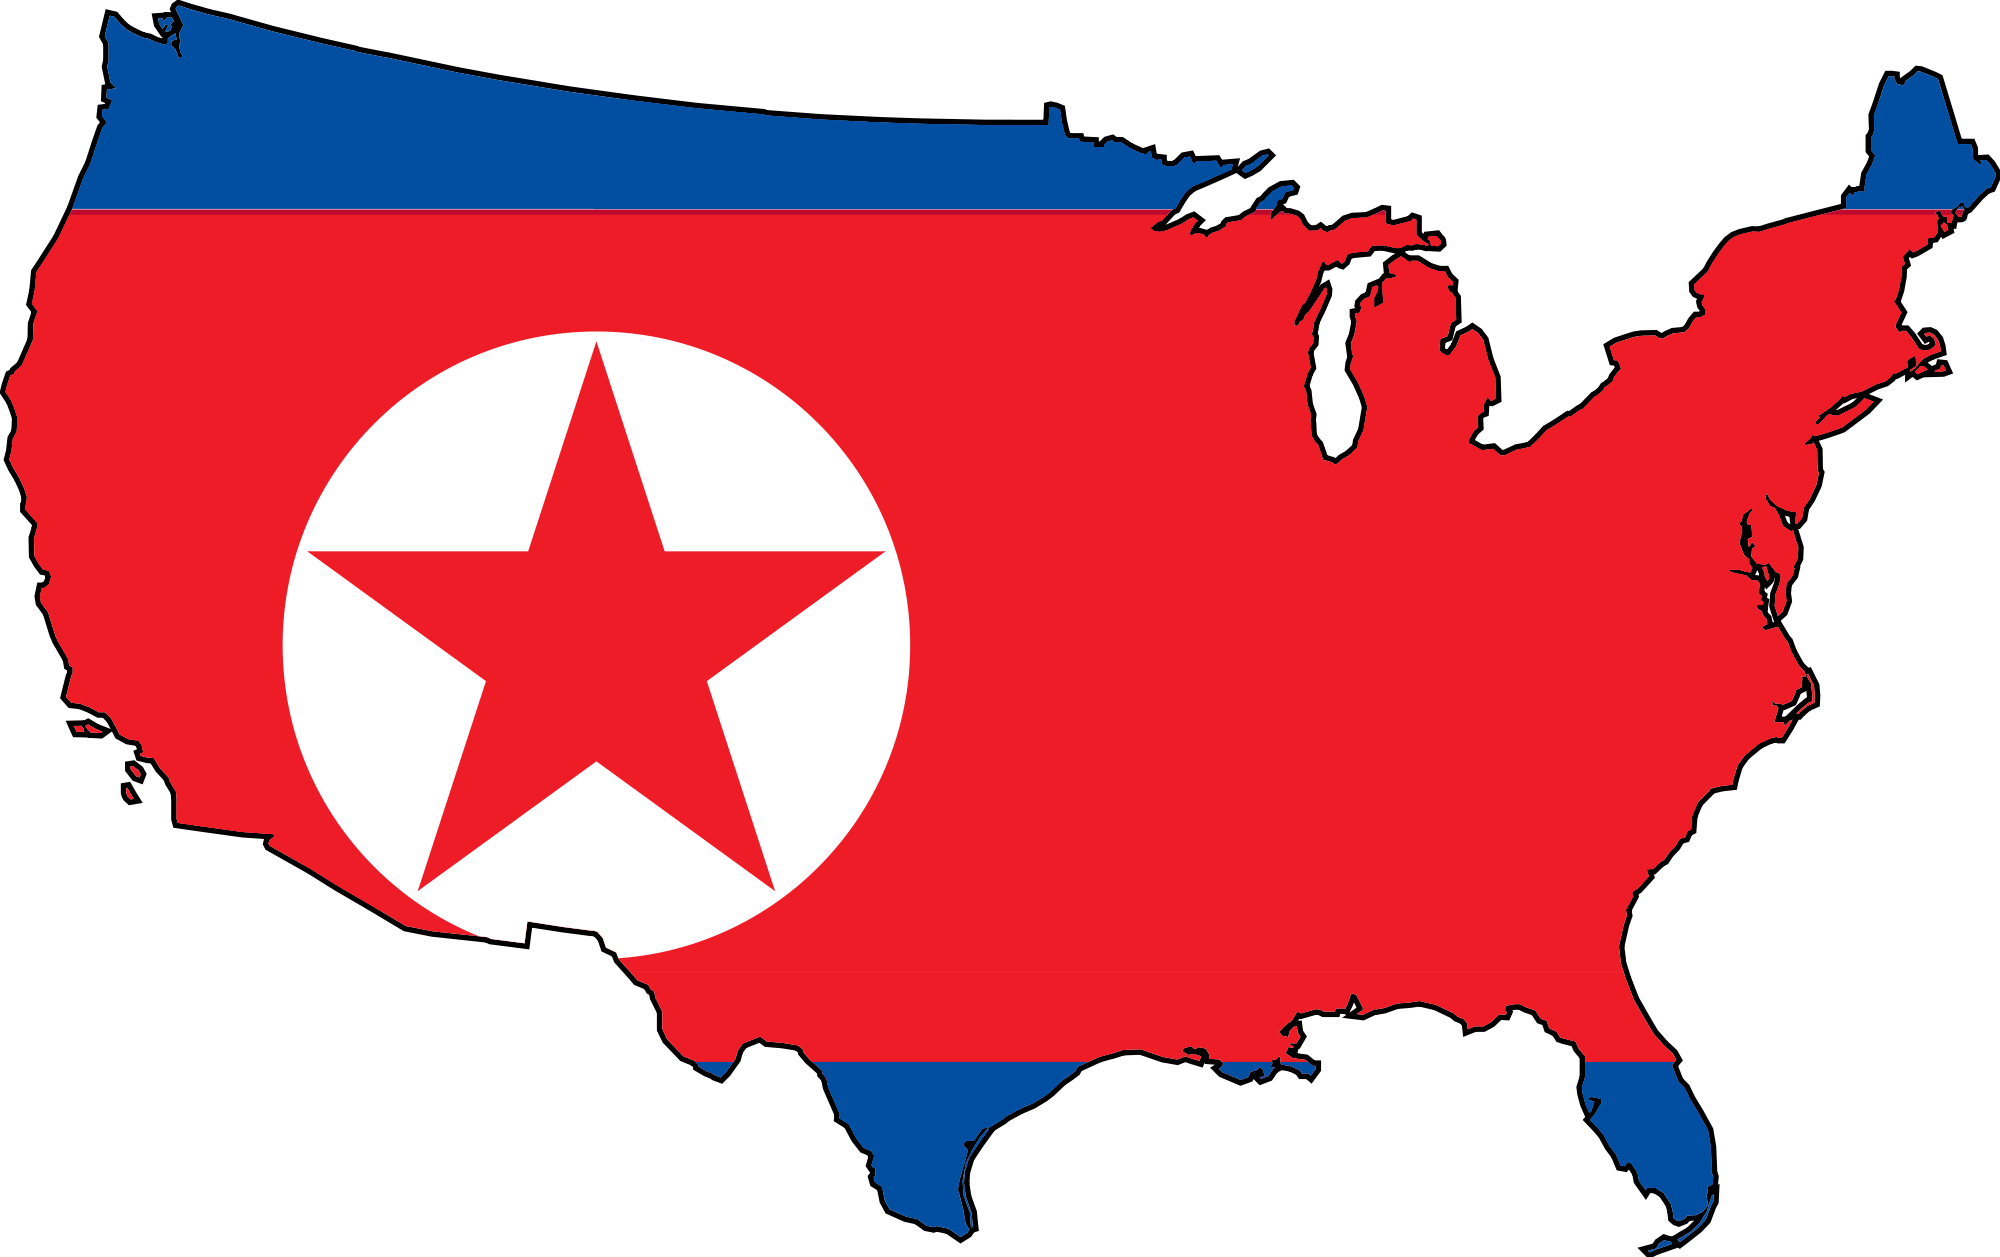 North Korea Flag PNG Free Image